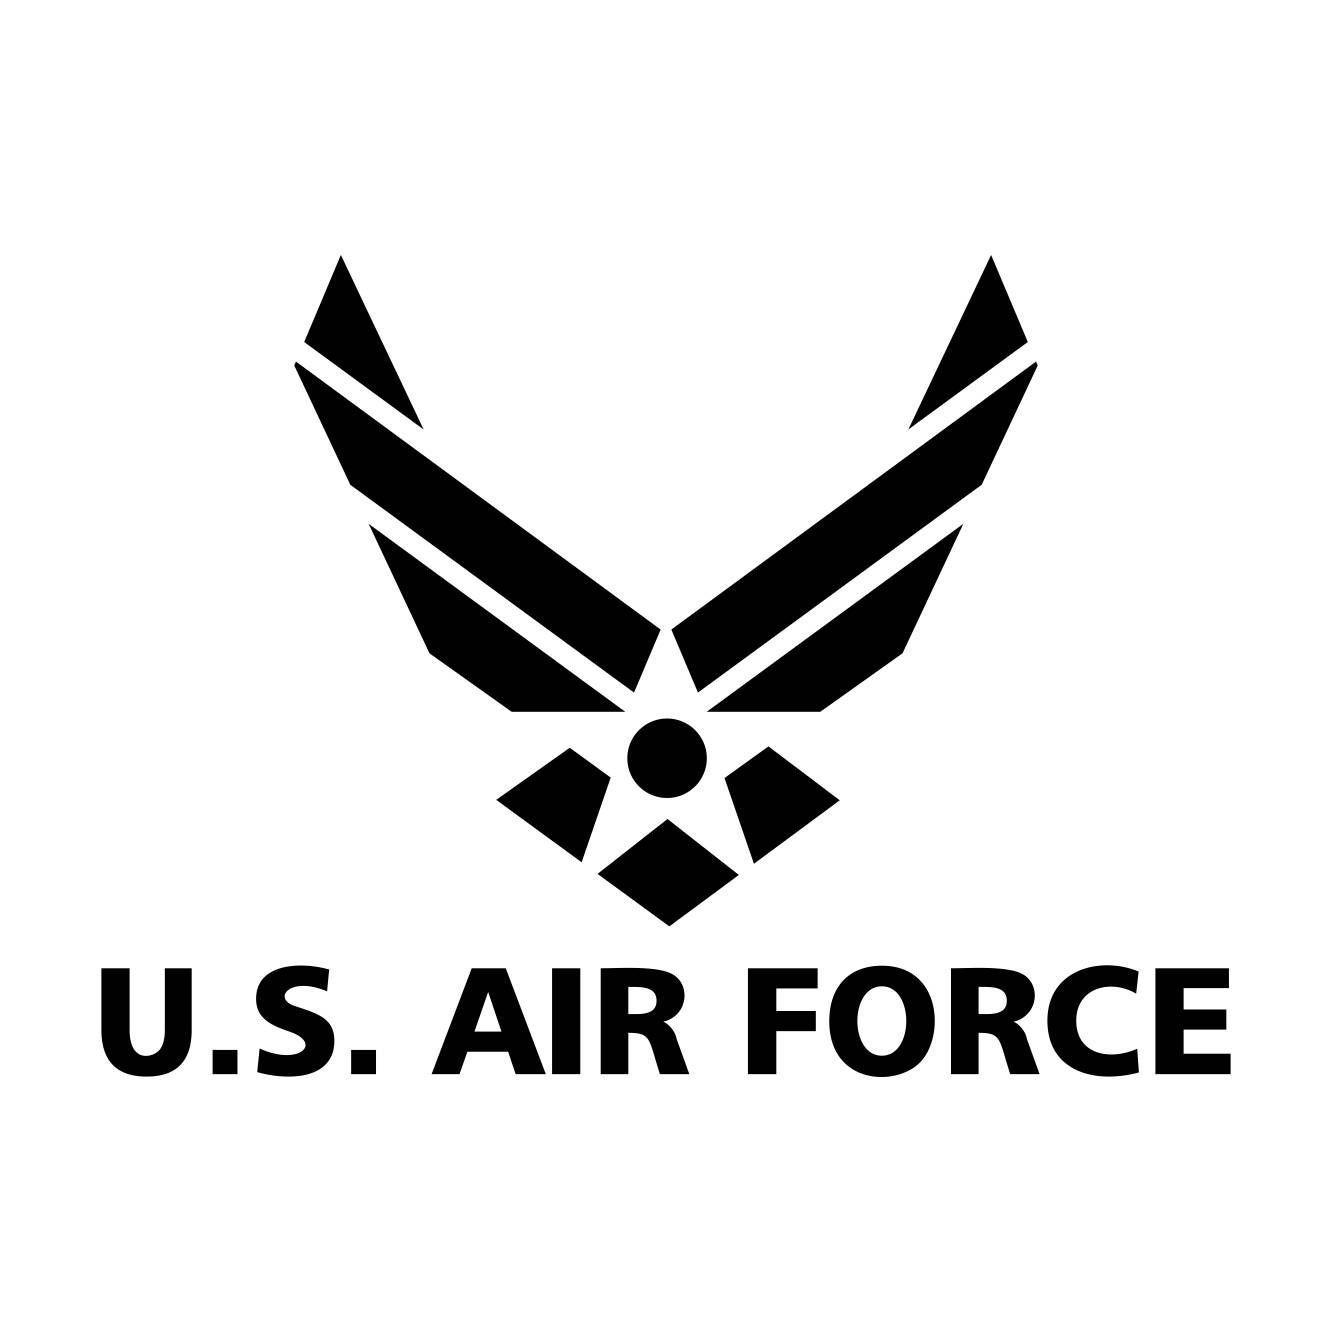 printable-air-force-logo